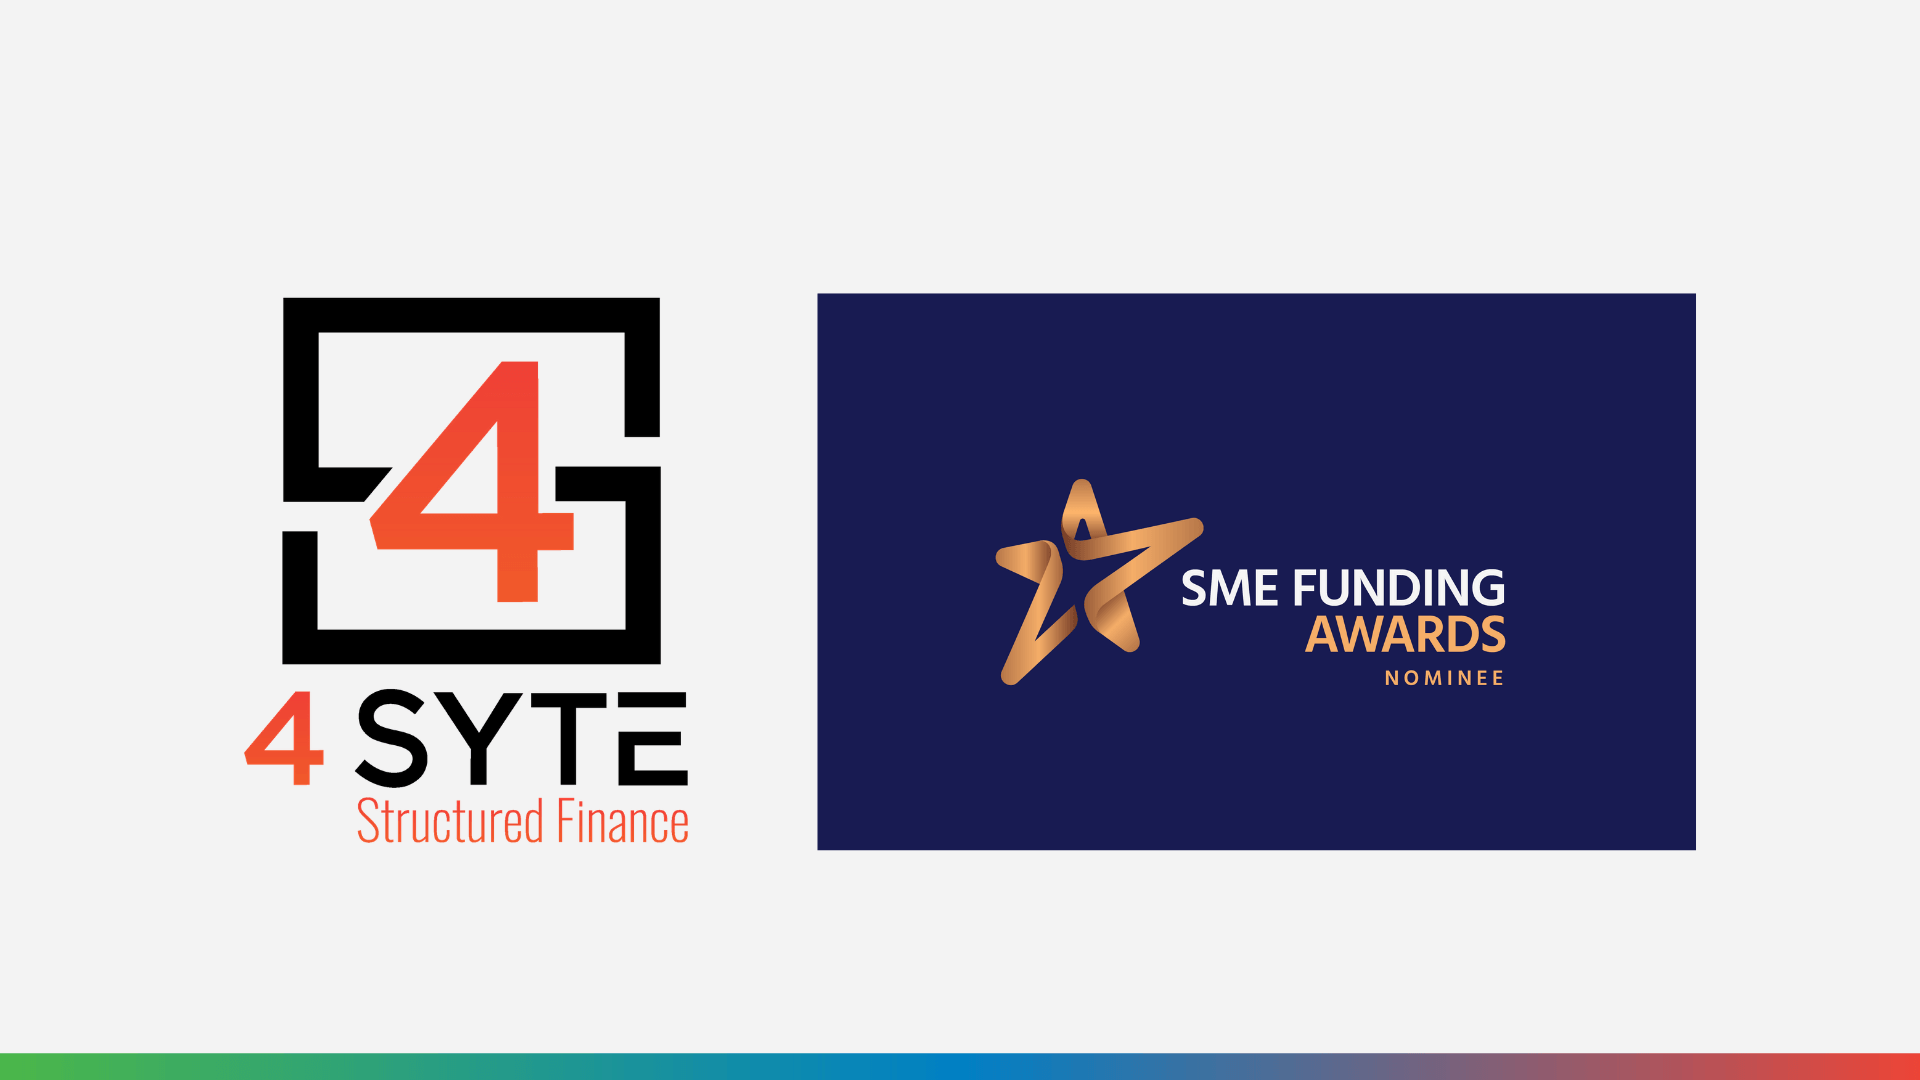 4Syte Structured Finance SME Funding Awards